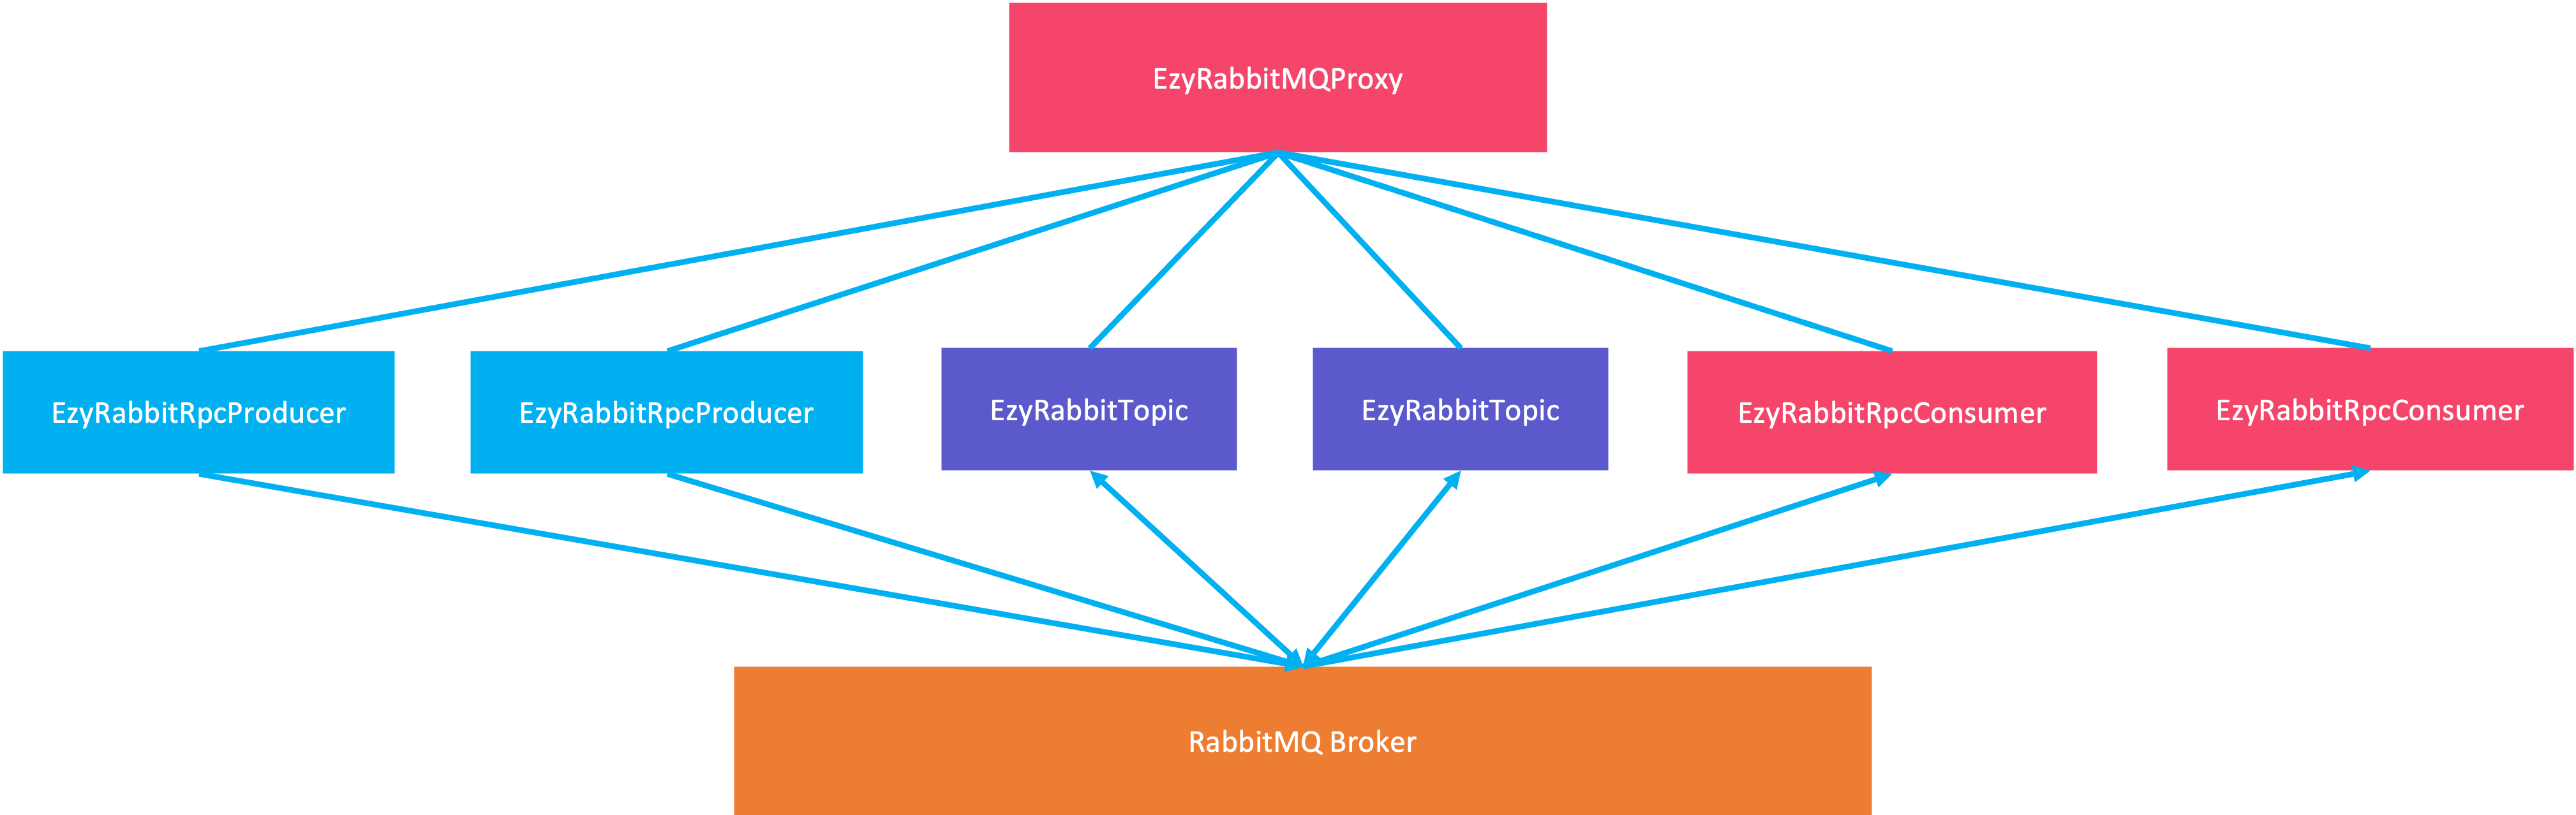 ezymq-rabbitmq-structure.png